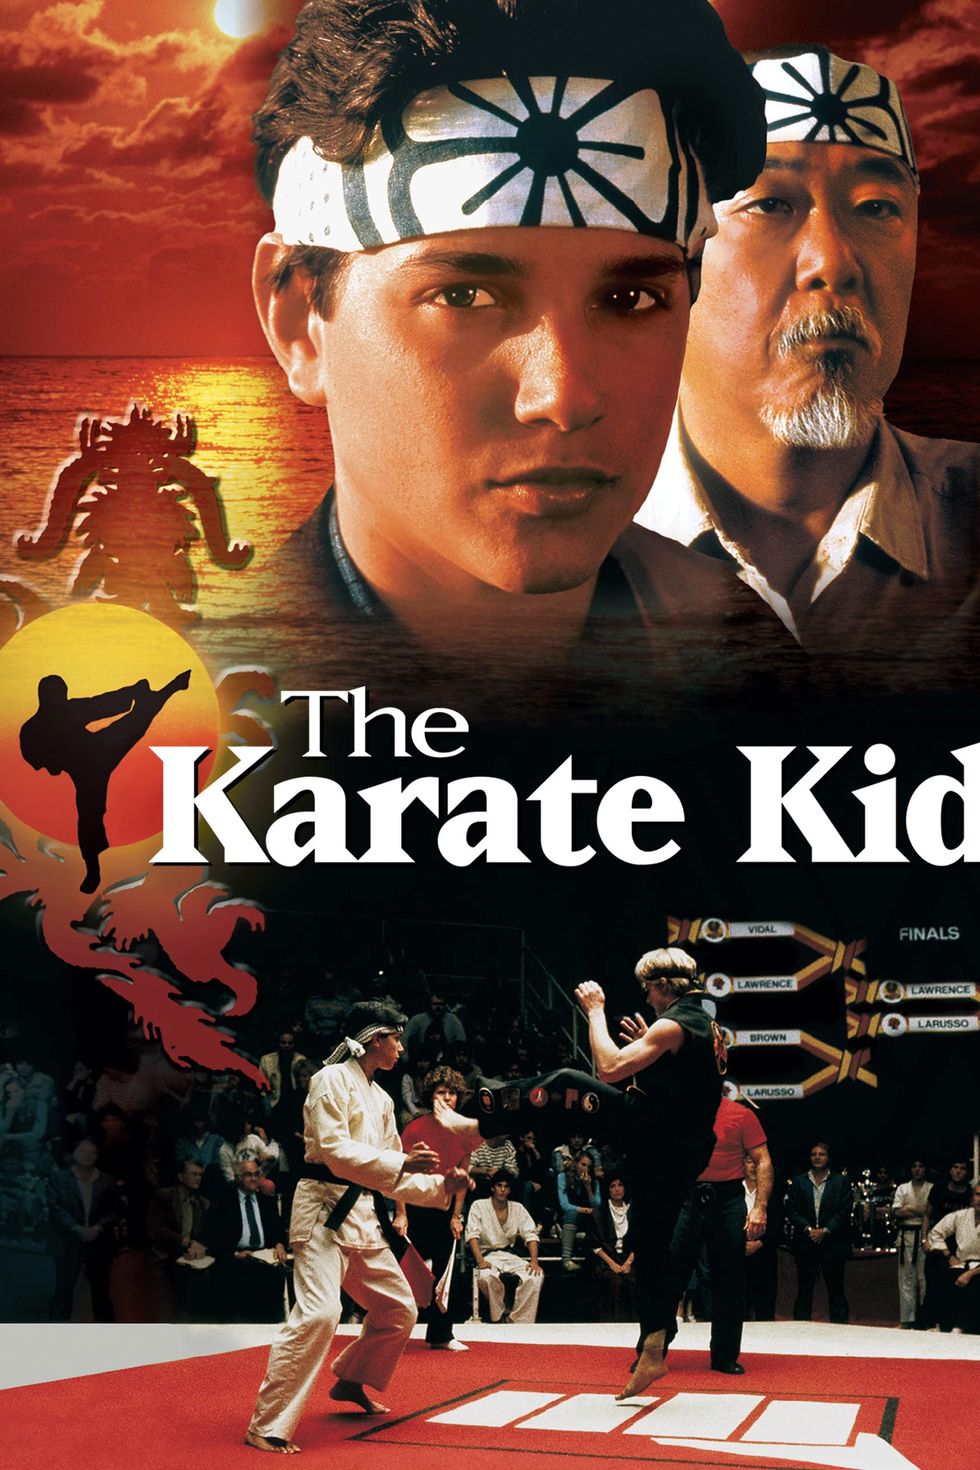 "The Karate Kid"